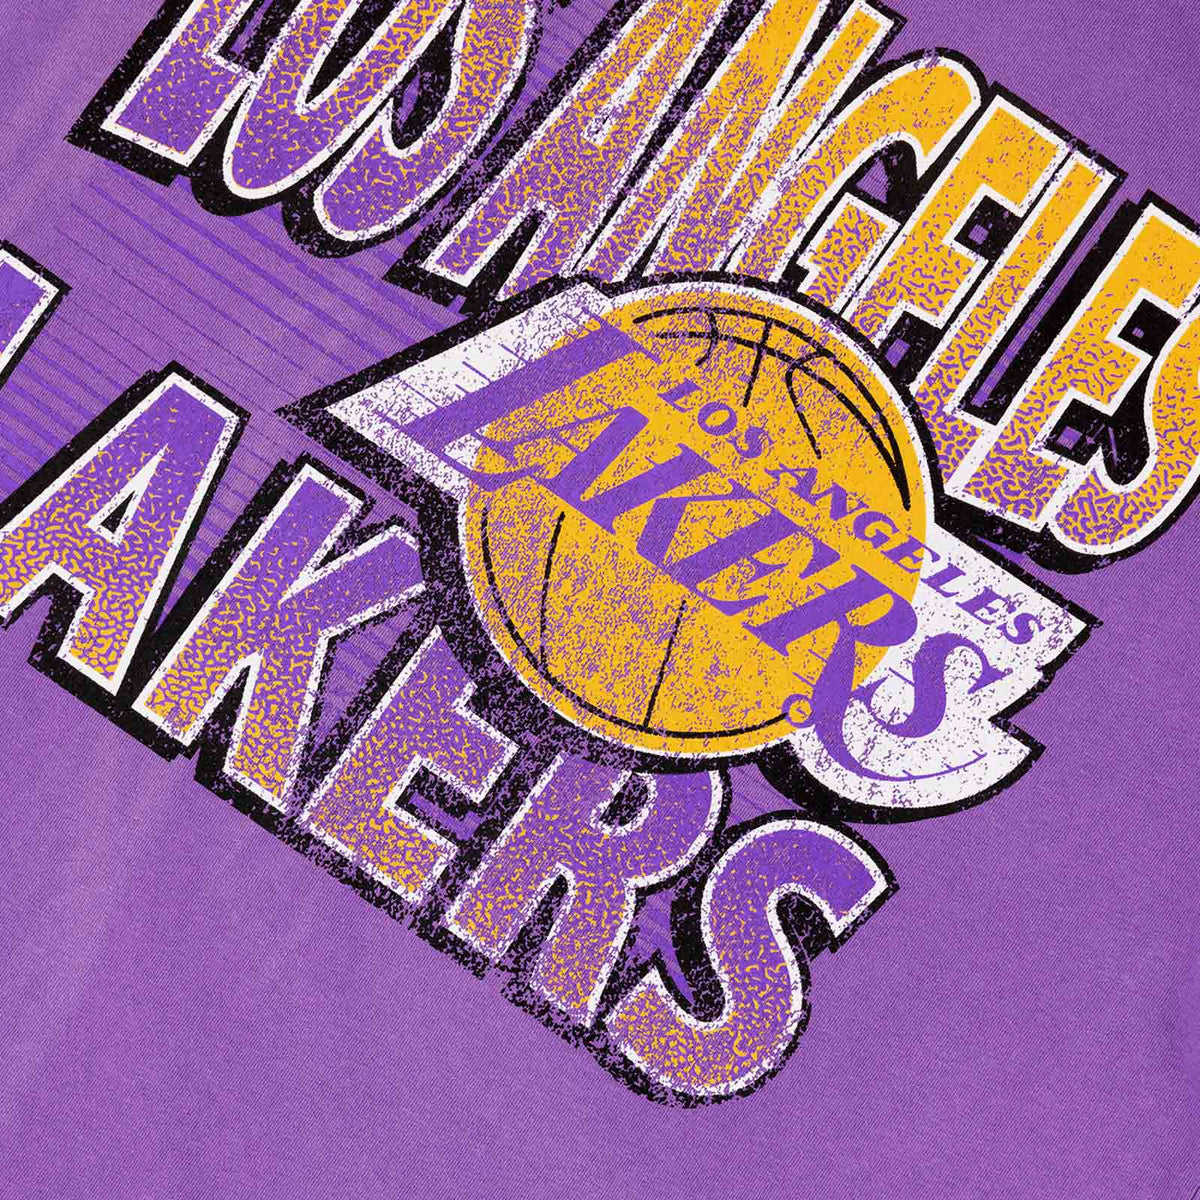 Vintage Los Angeles Lakers T-Shirt Logo 7 NBA Jersey Size M Basketball  Purple